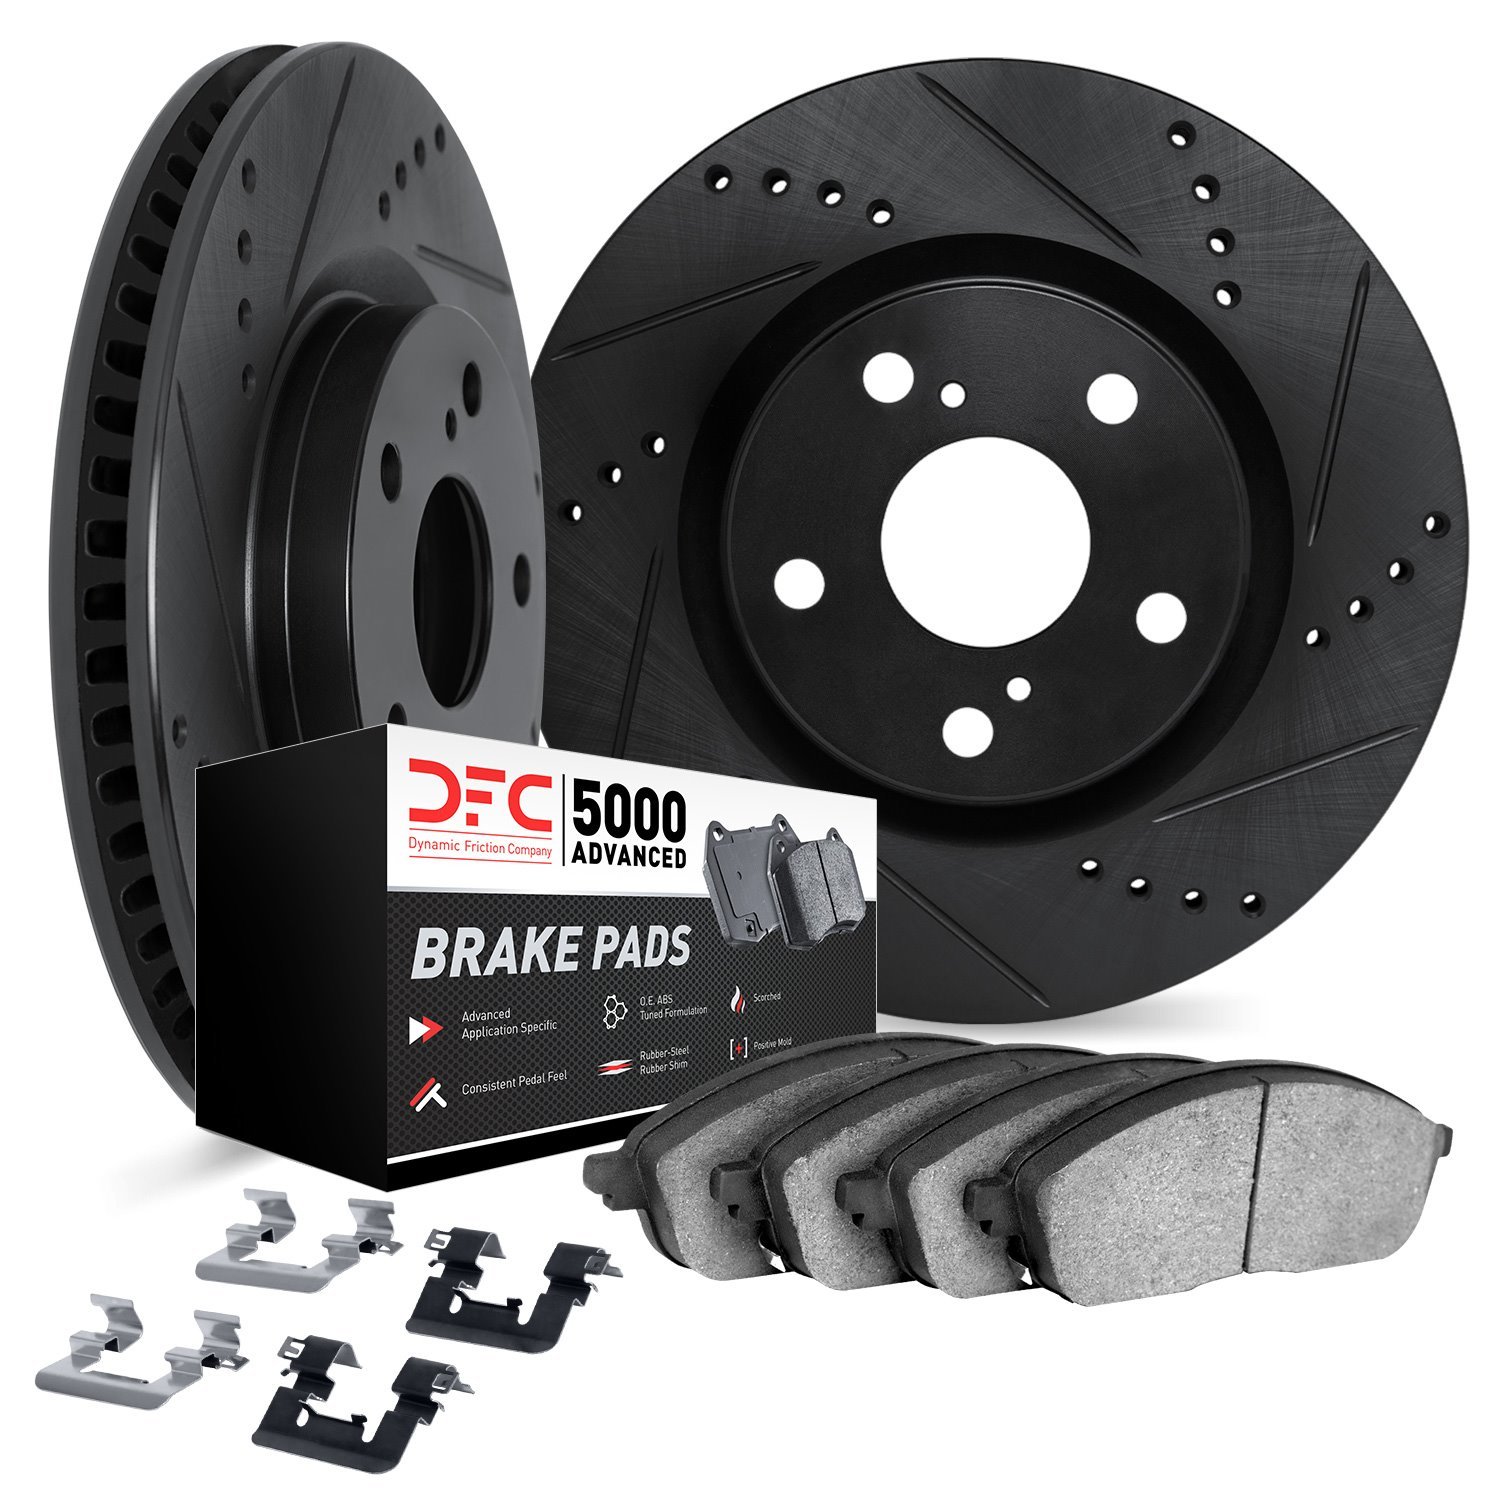 8512-31617 Drilled/Slotted Brake Rotors w/5000 Advanced Brake Pads Kit & Hardware [Black], Fits Select Multiple Makes/Models, Po